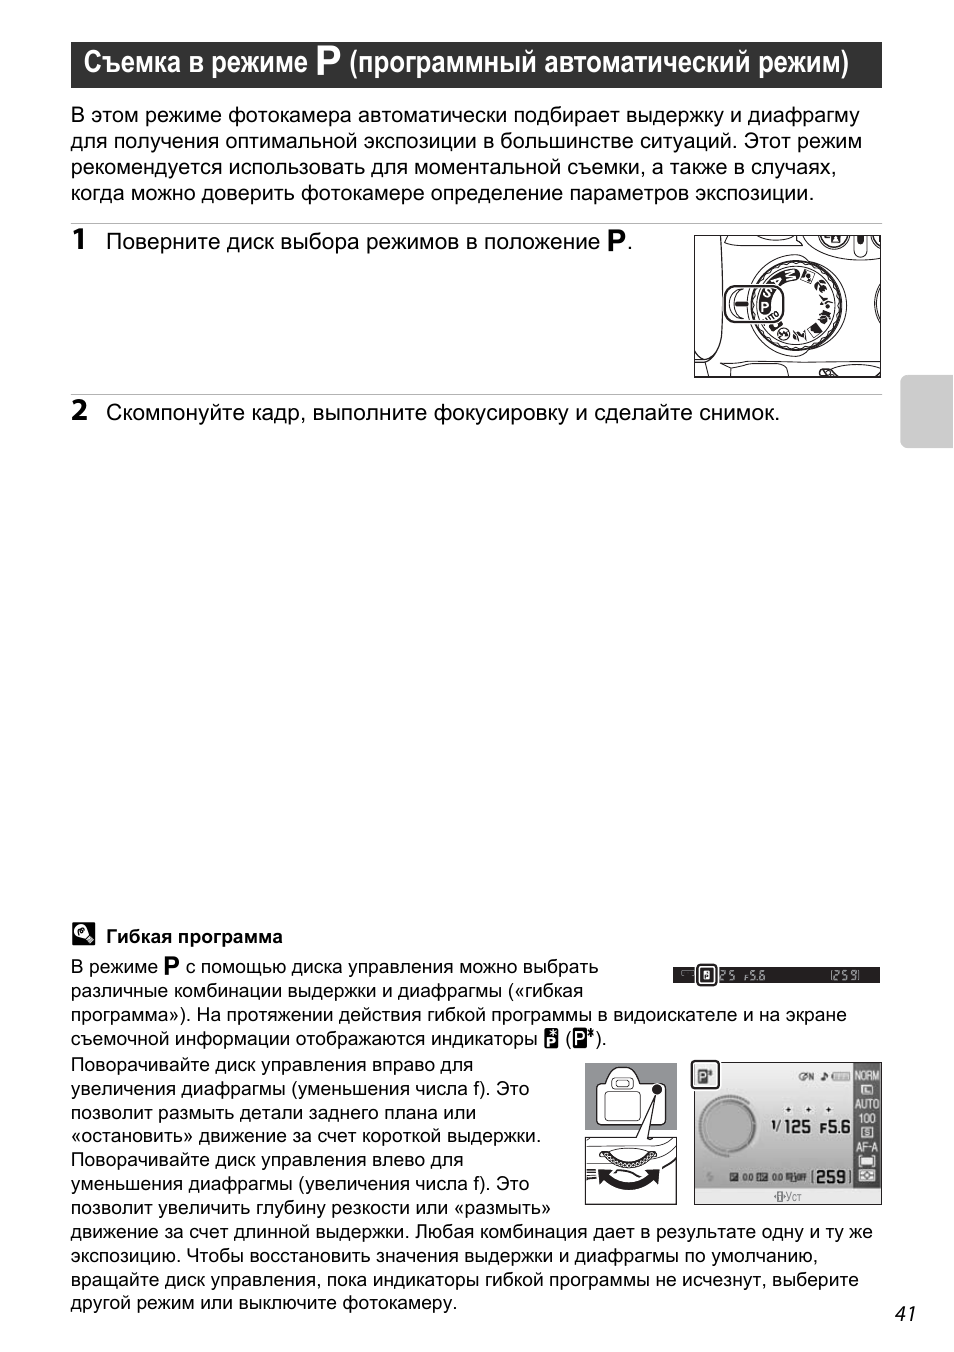 A 41) | Инструкция по эксплуатации Nikon D60 | Страница 53 / 204